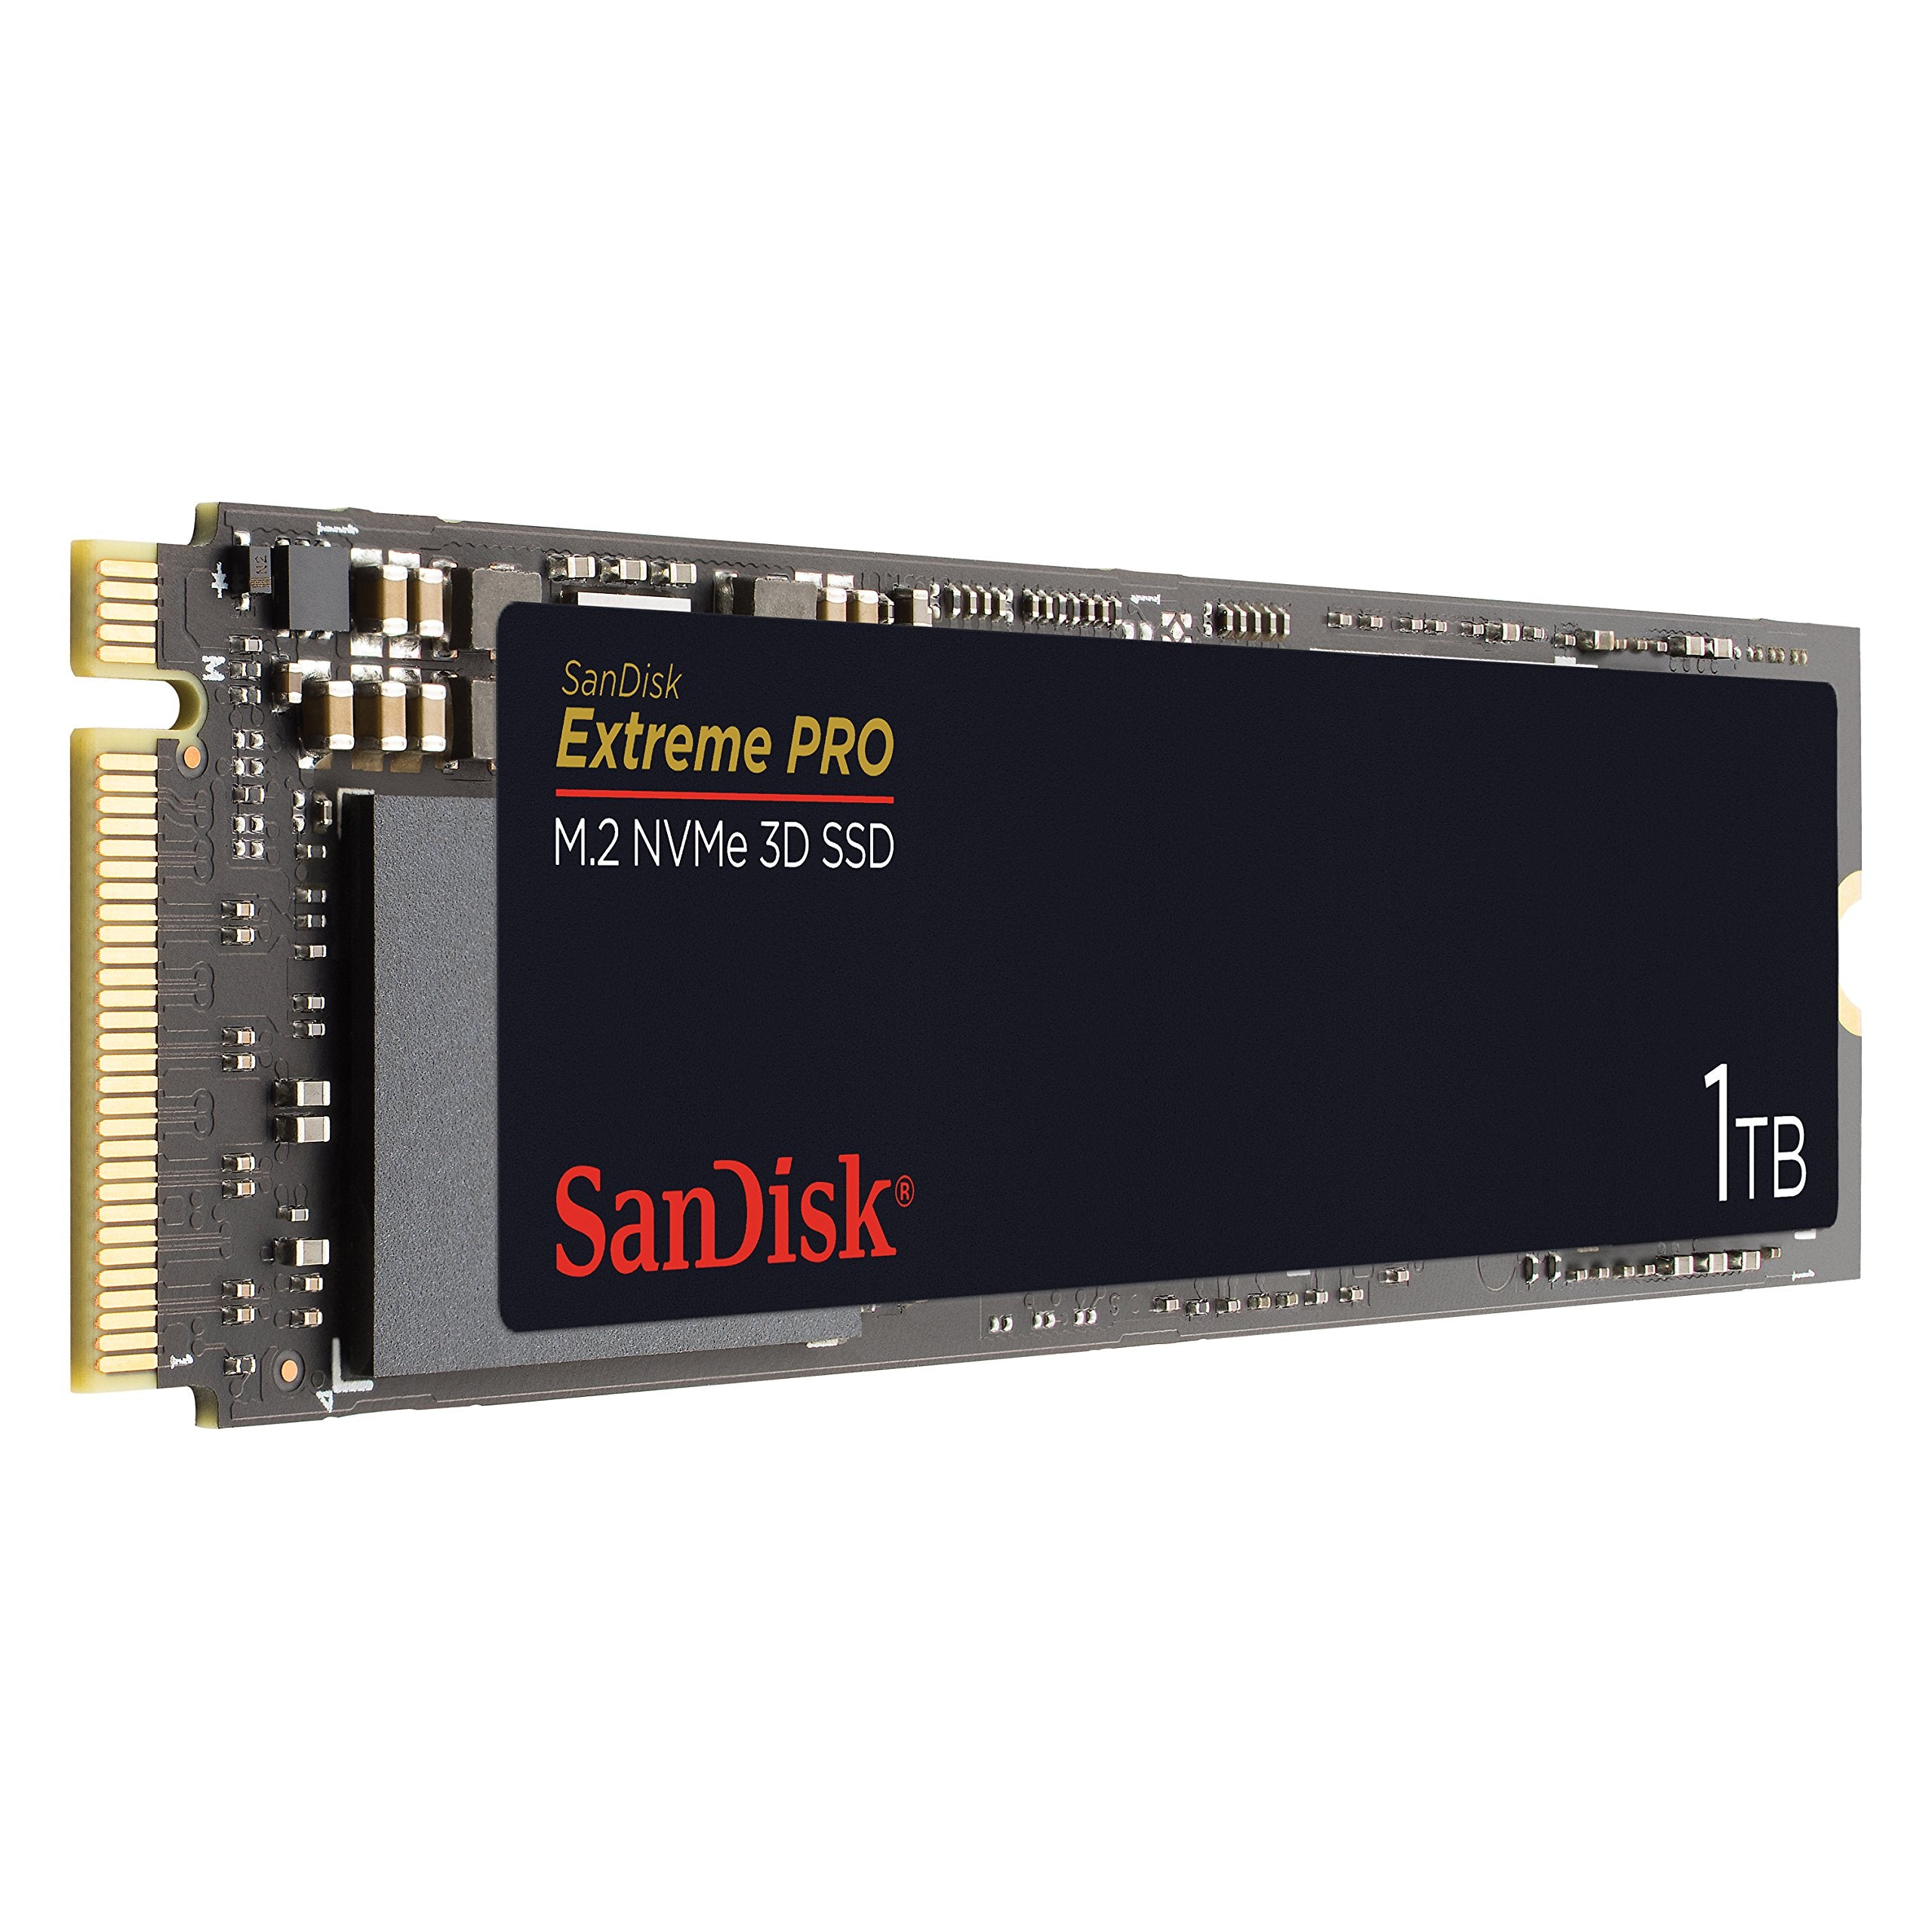 SanDisk Extreme PRO M.2 NVMe 3D SSD - 1TB